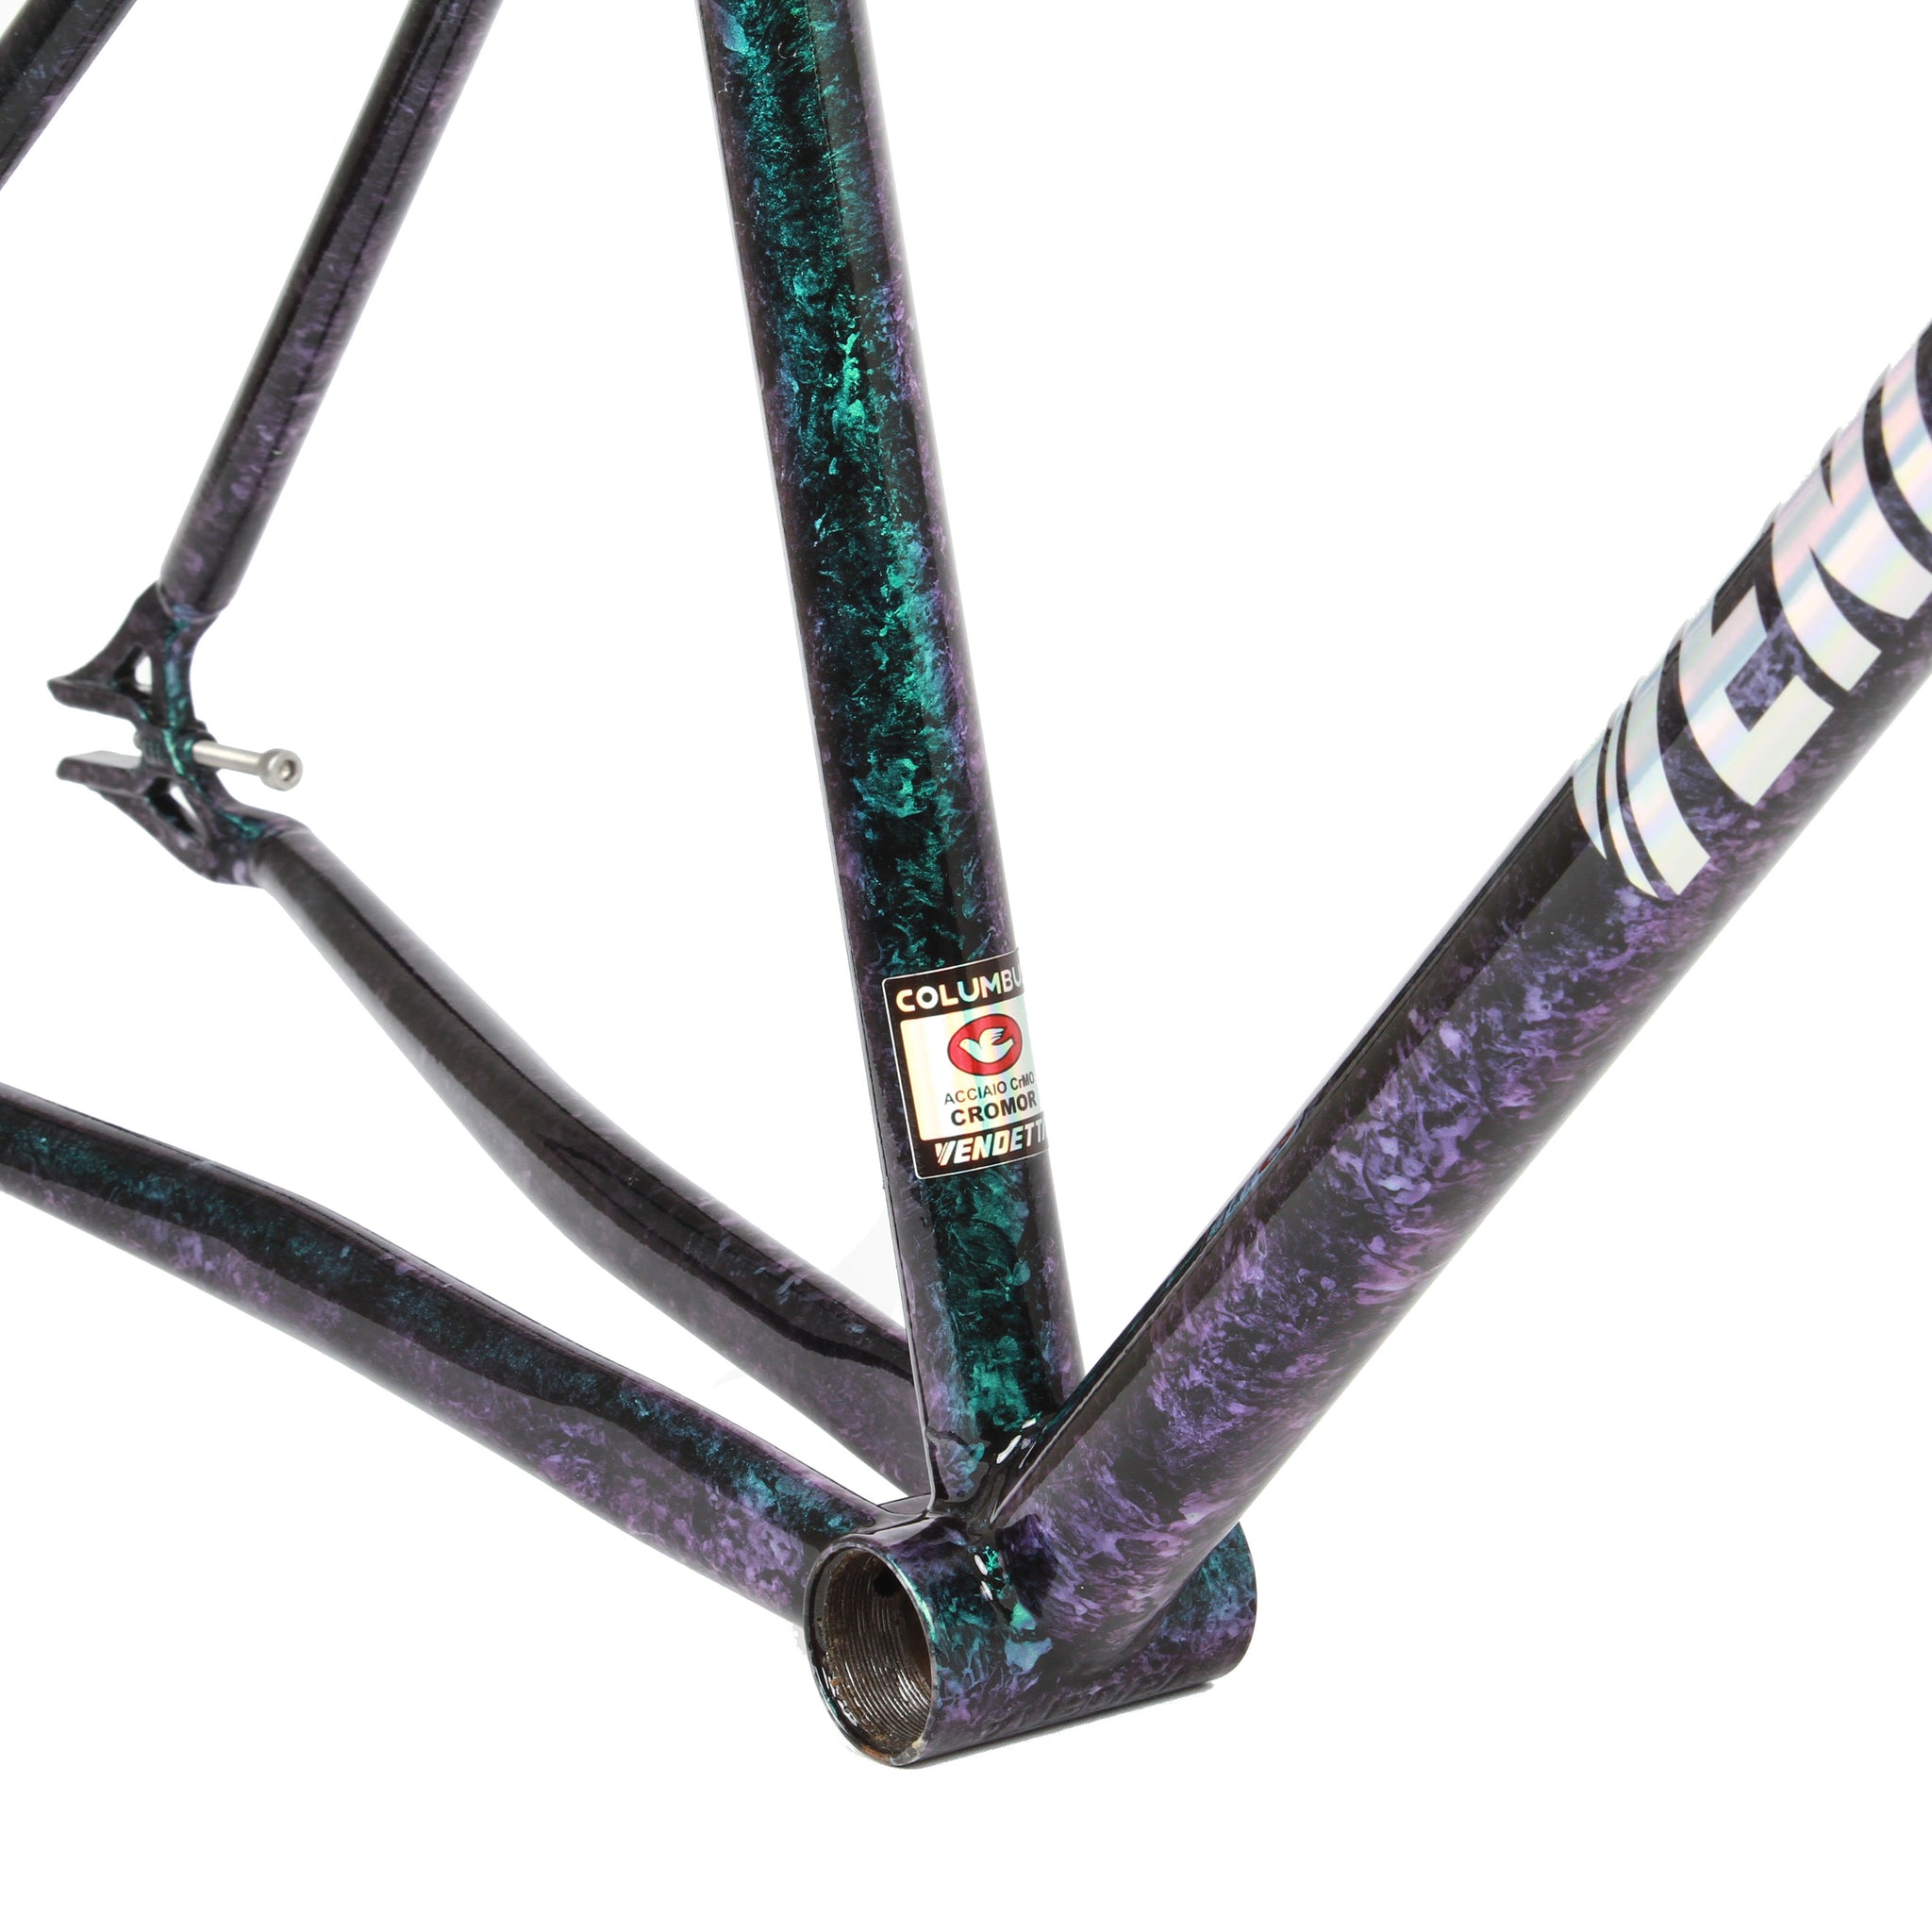 Vendetta Mega Low Pro Triplet frameset - purple/green marble - Retrogression Fixed Gear